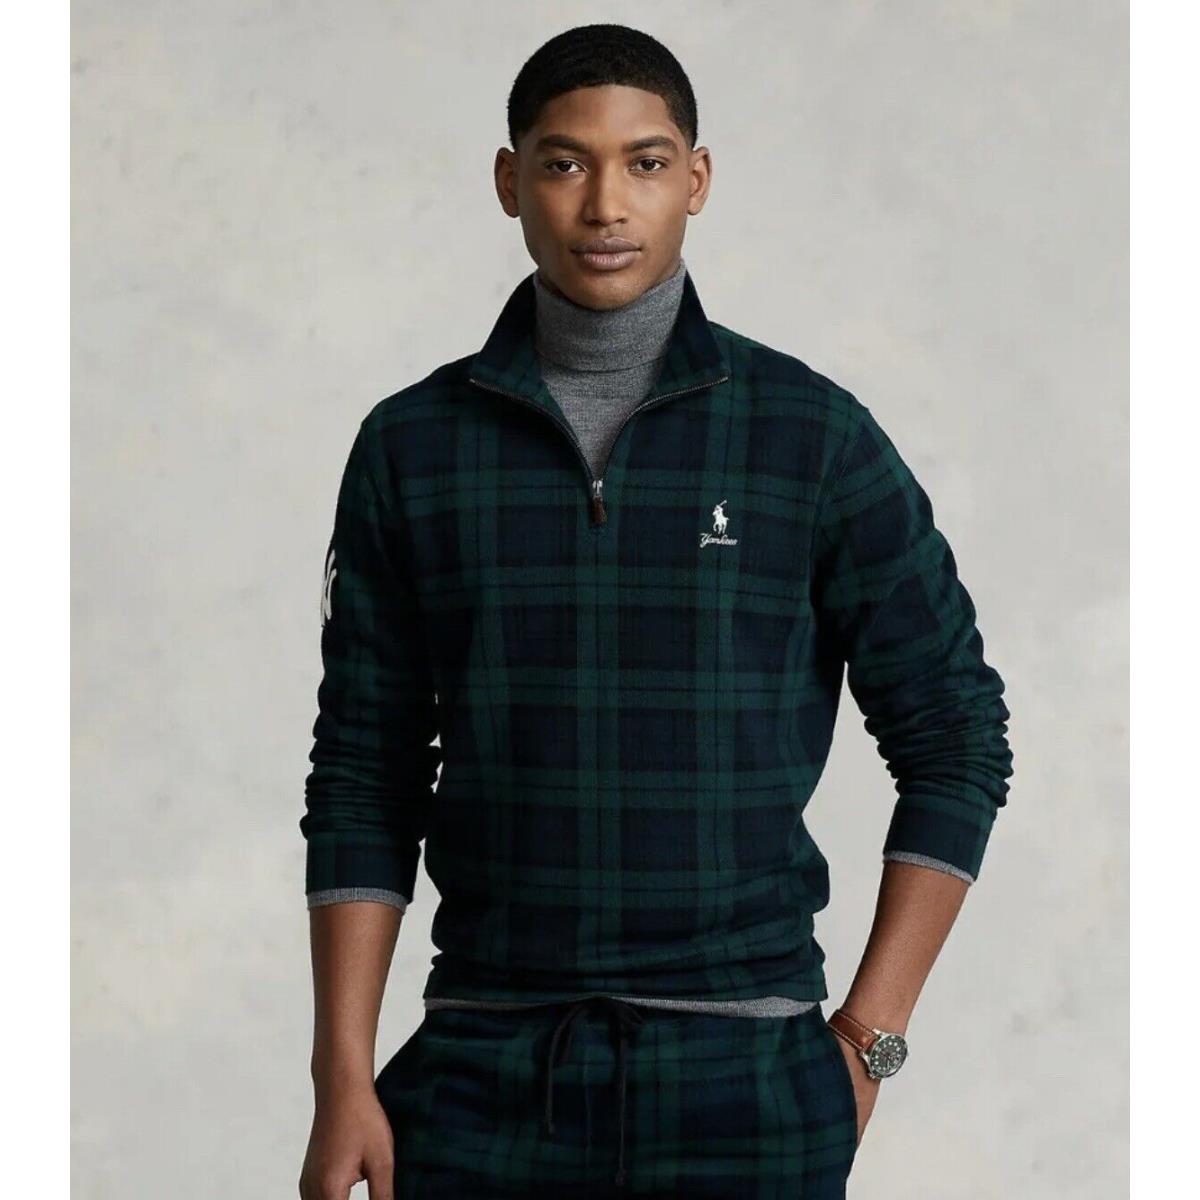 Polo Ralph Lauren NY Yankees Mlb Quarter Zip Plaid Blackwatch Sweater Large